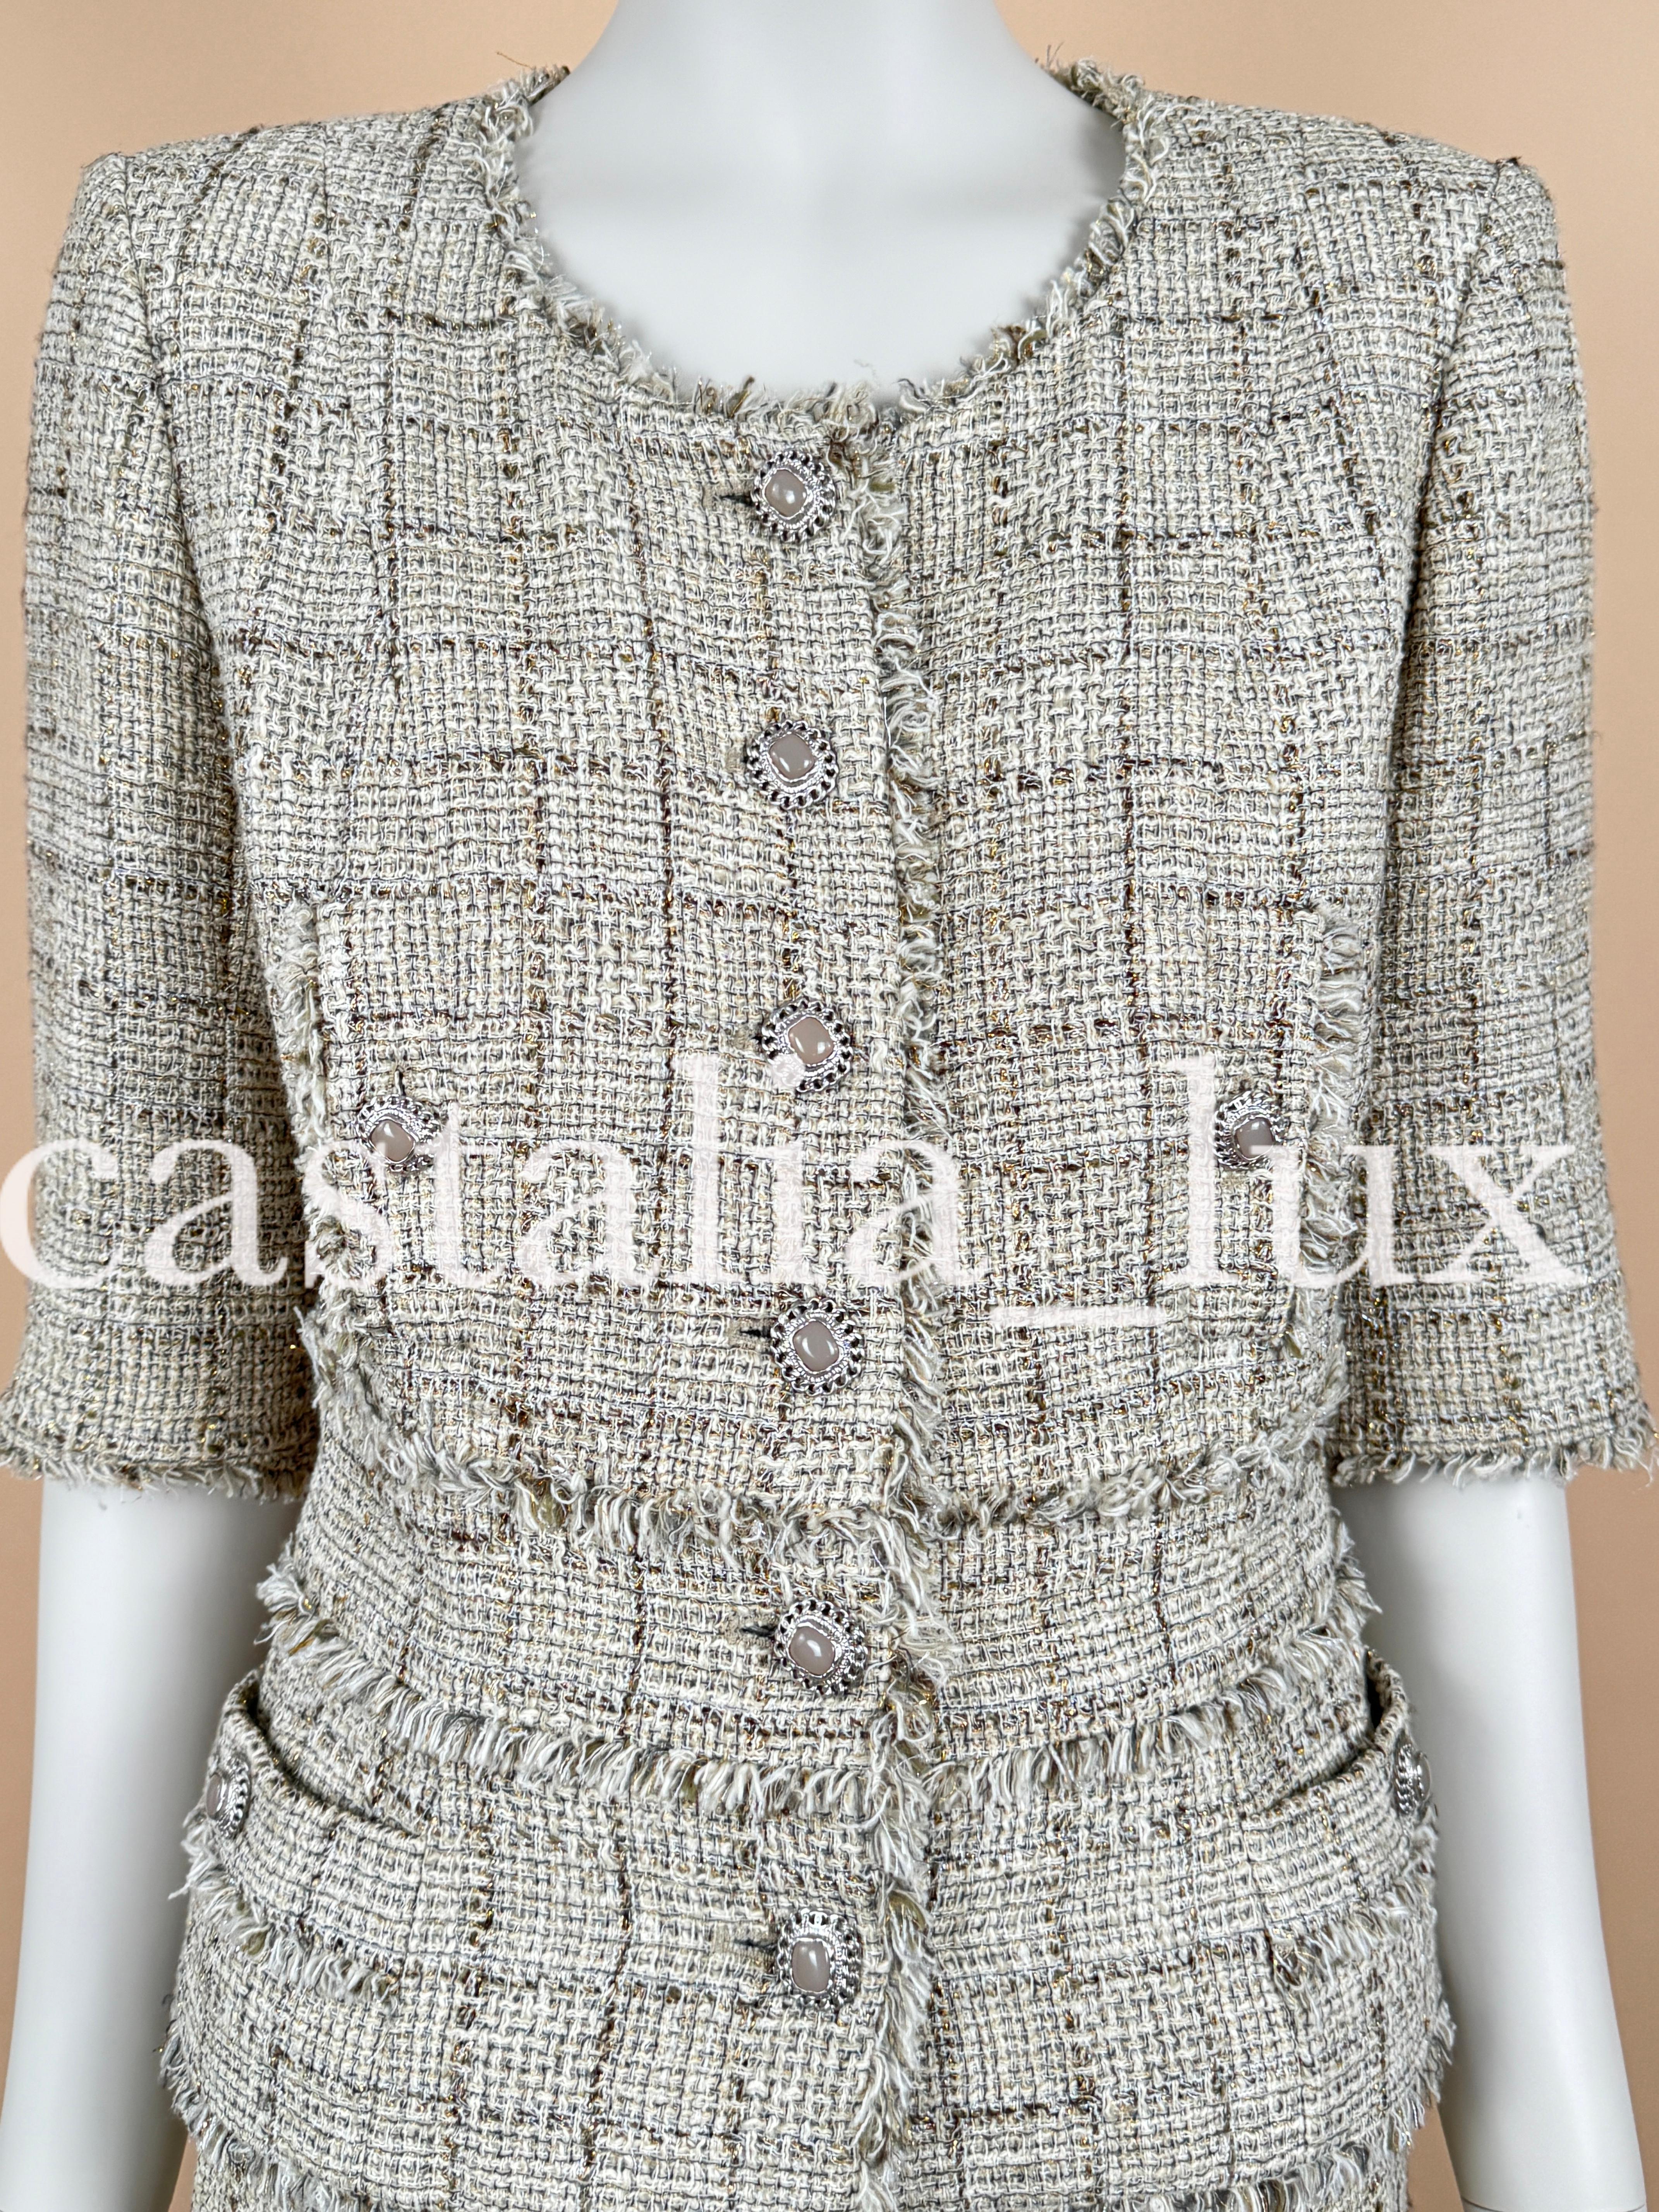 Chanel Gisele Bundchen Style Jewel Buttons Tweed Suit For Sale 5